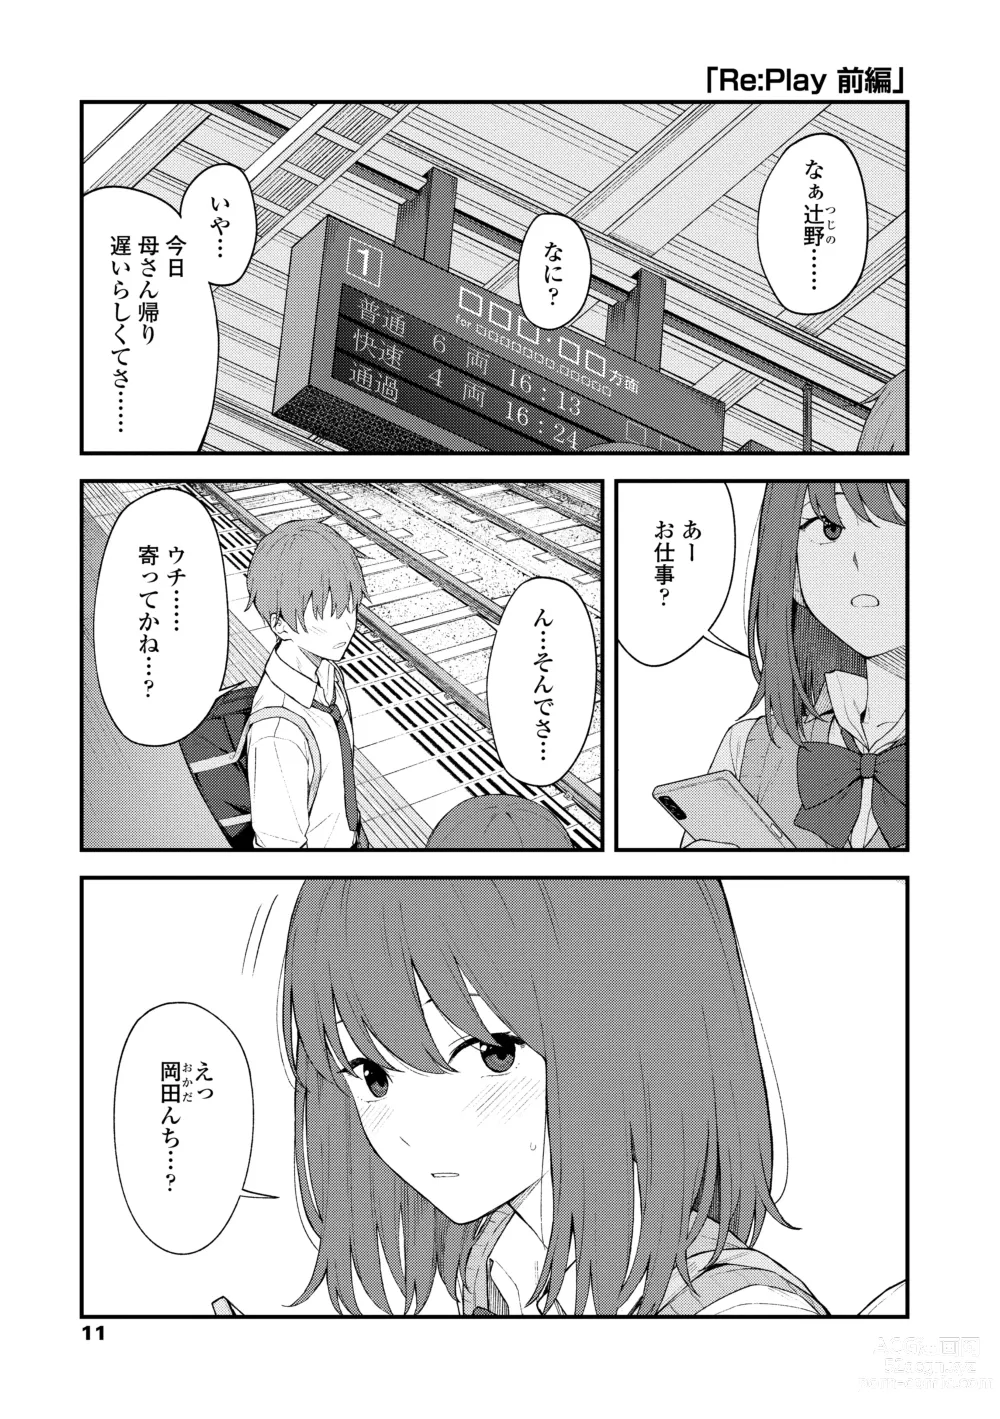 Page 13 of manga Futari, Hitotoki.